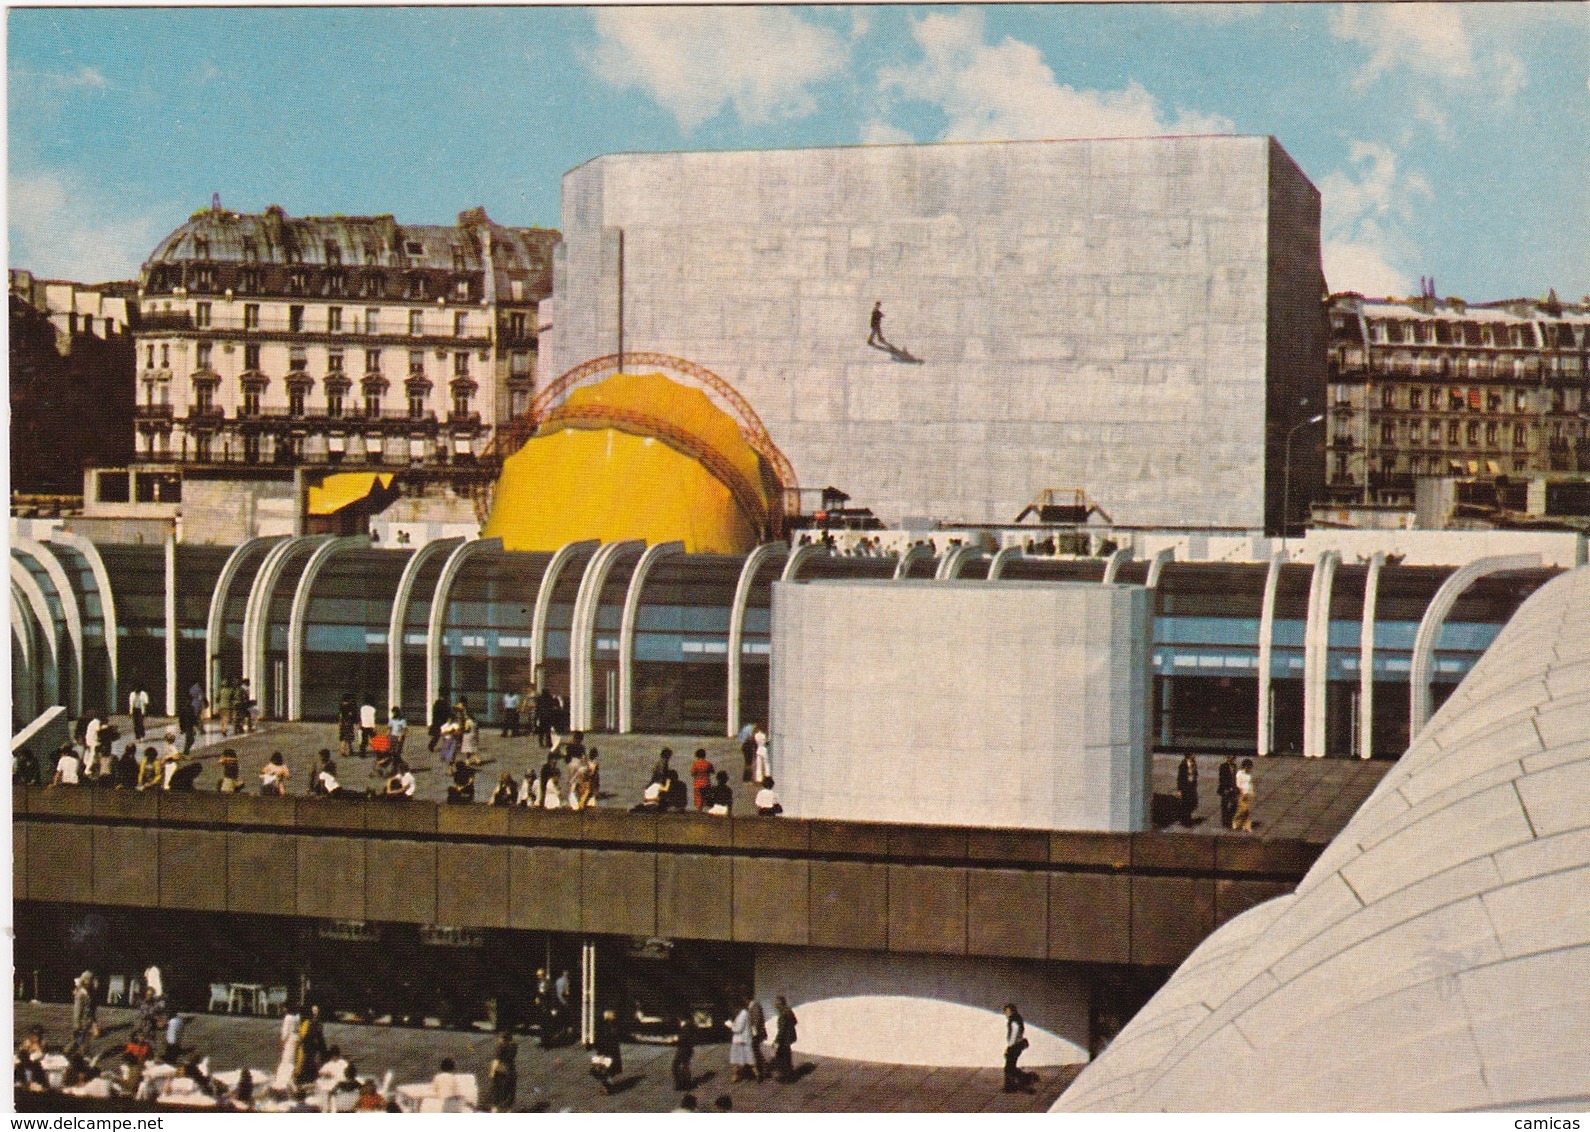 PARIS: Le FORUM Des Halles (Arch. C.VASCONI - G.PENCREAC'H) - Piazze Di Mercato